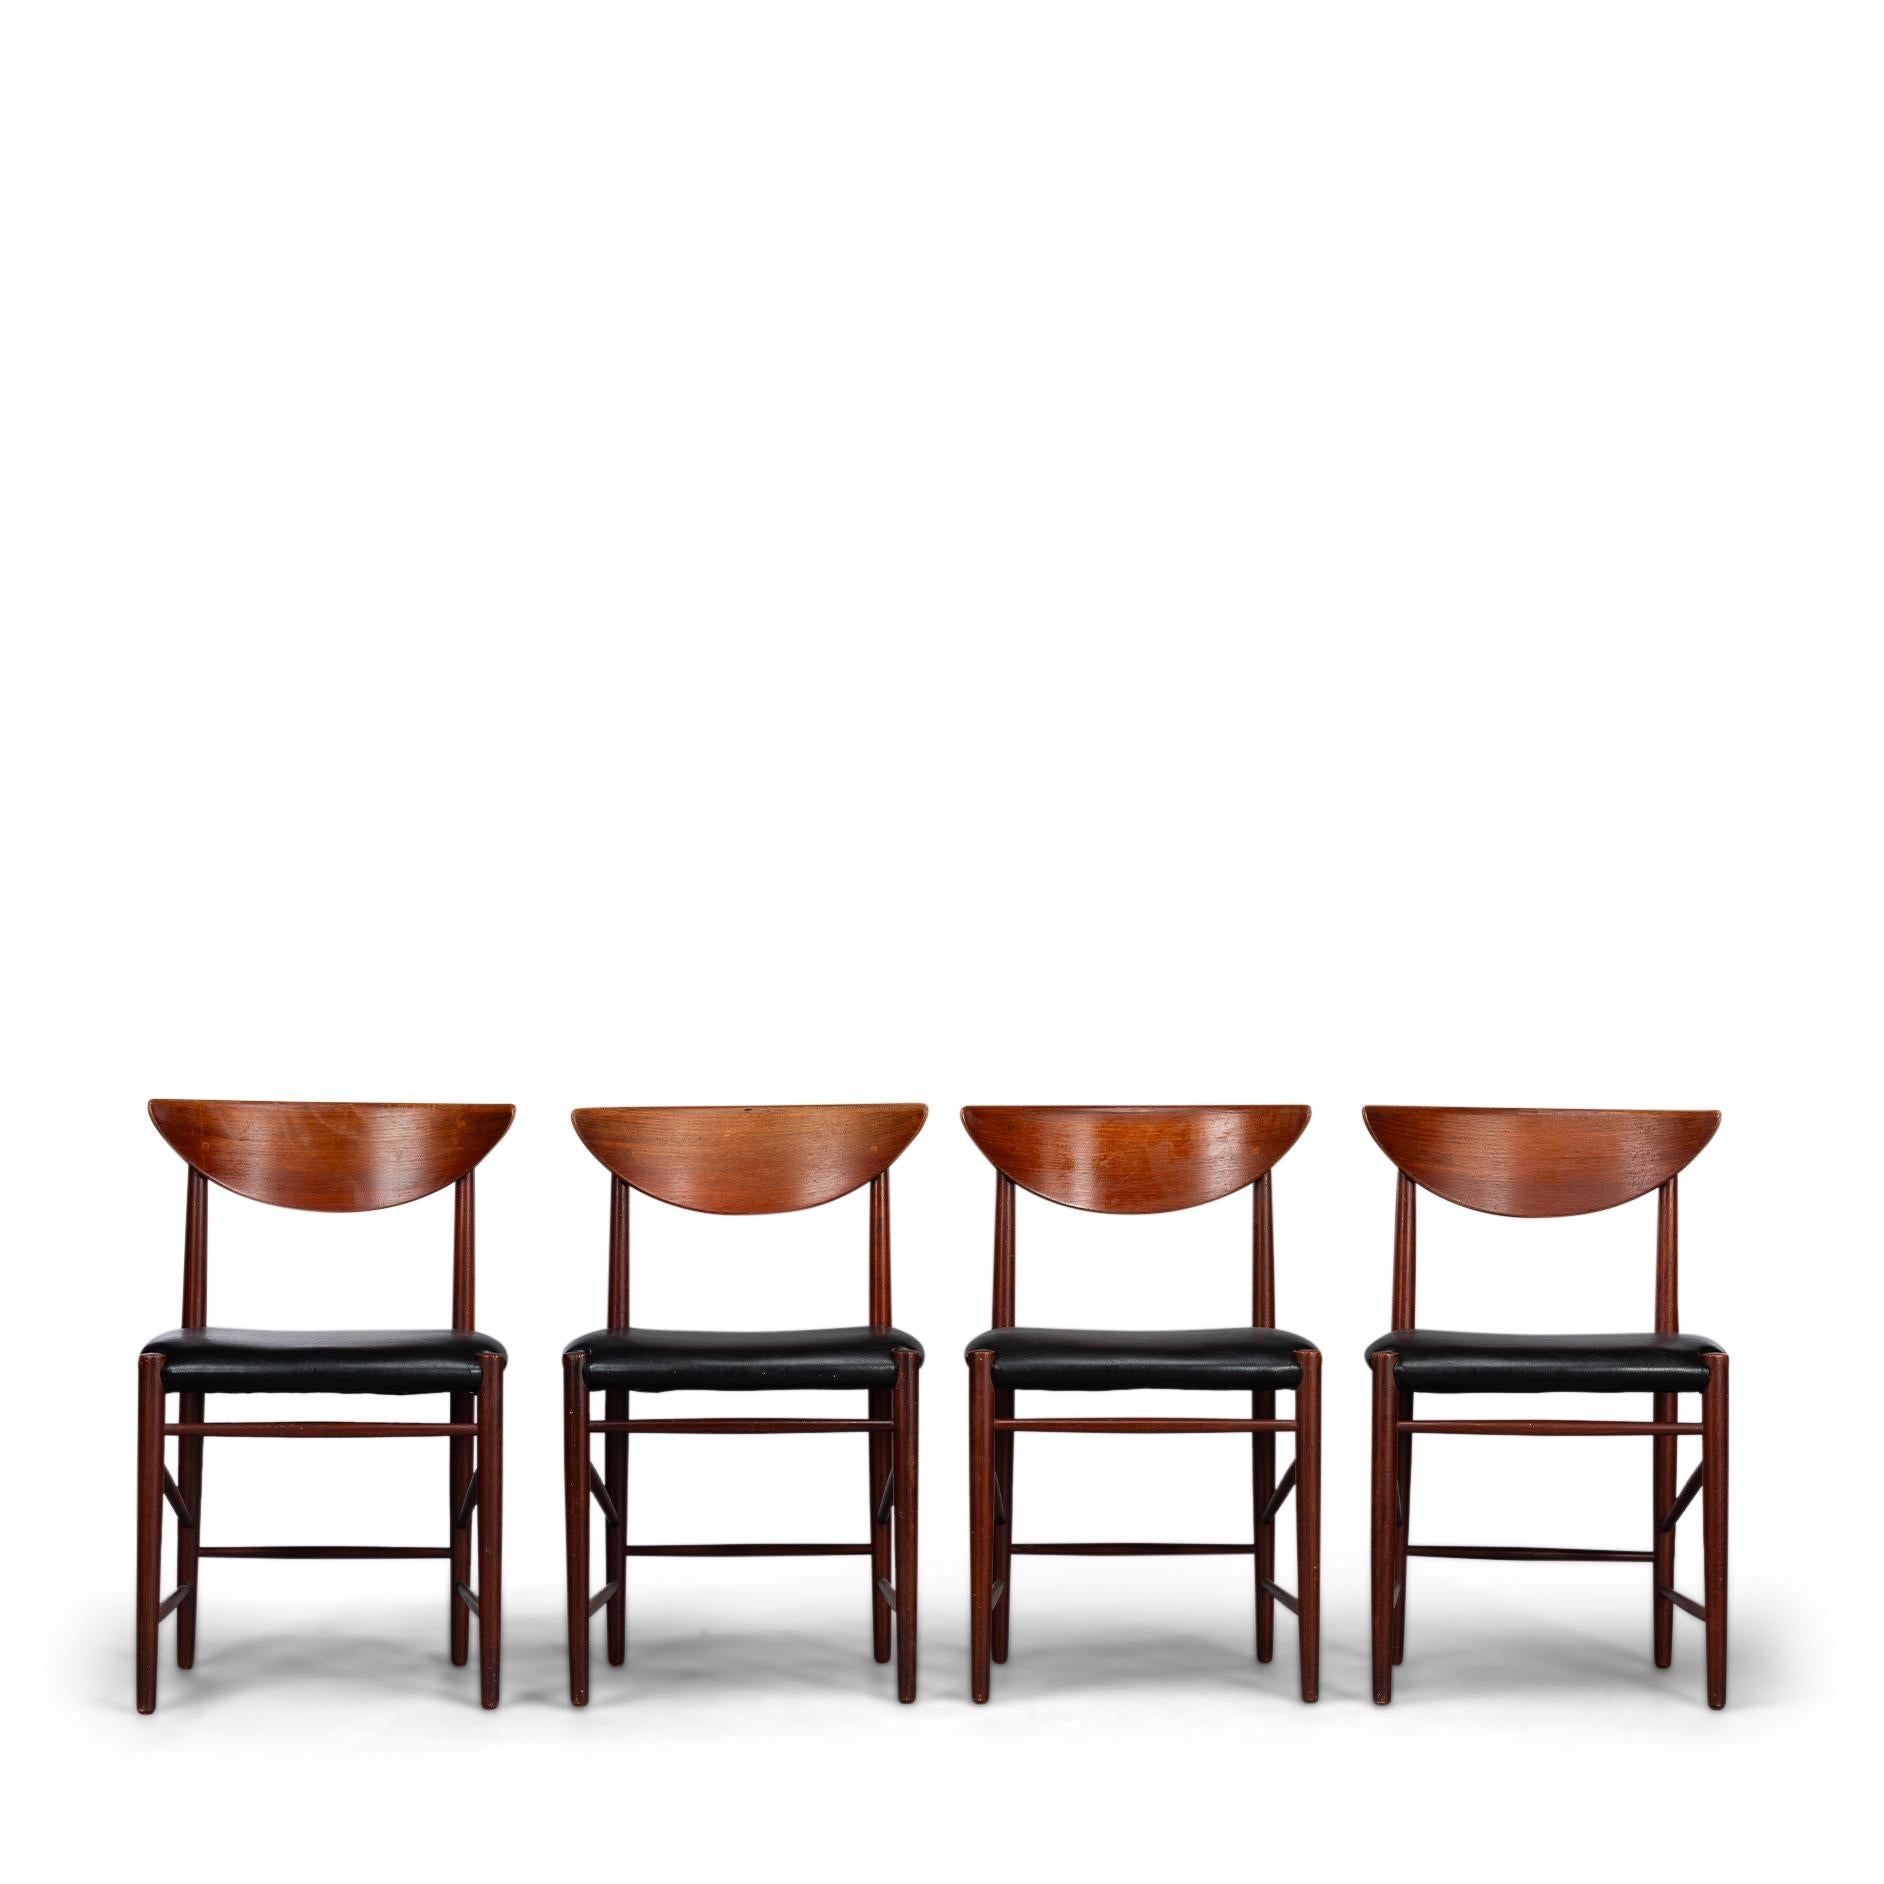 Mid-20th Century Reupholstered Teak Chair Model # 317 by Peter Hvidt for Soborg Mobel, Set of 4 For Sale